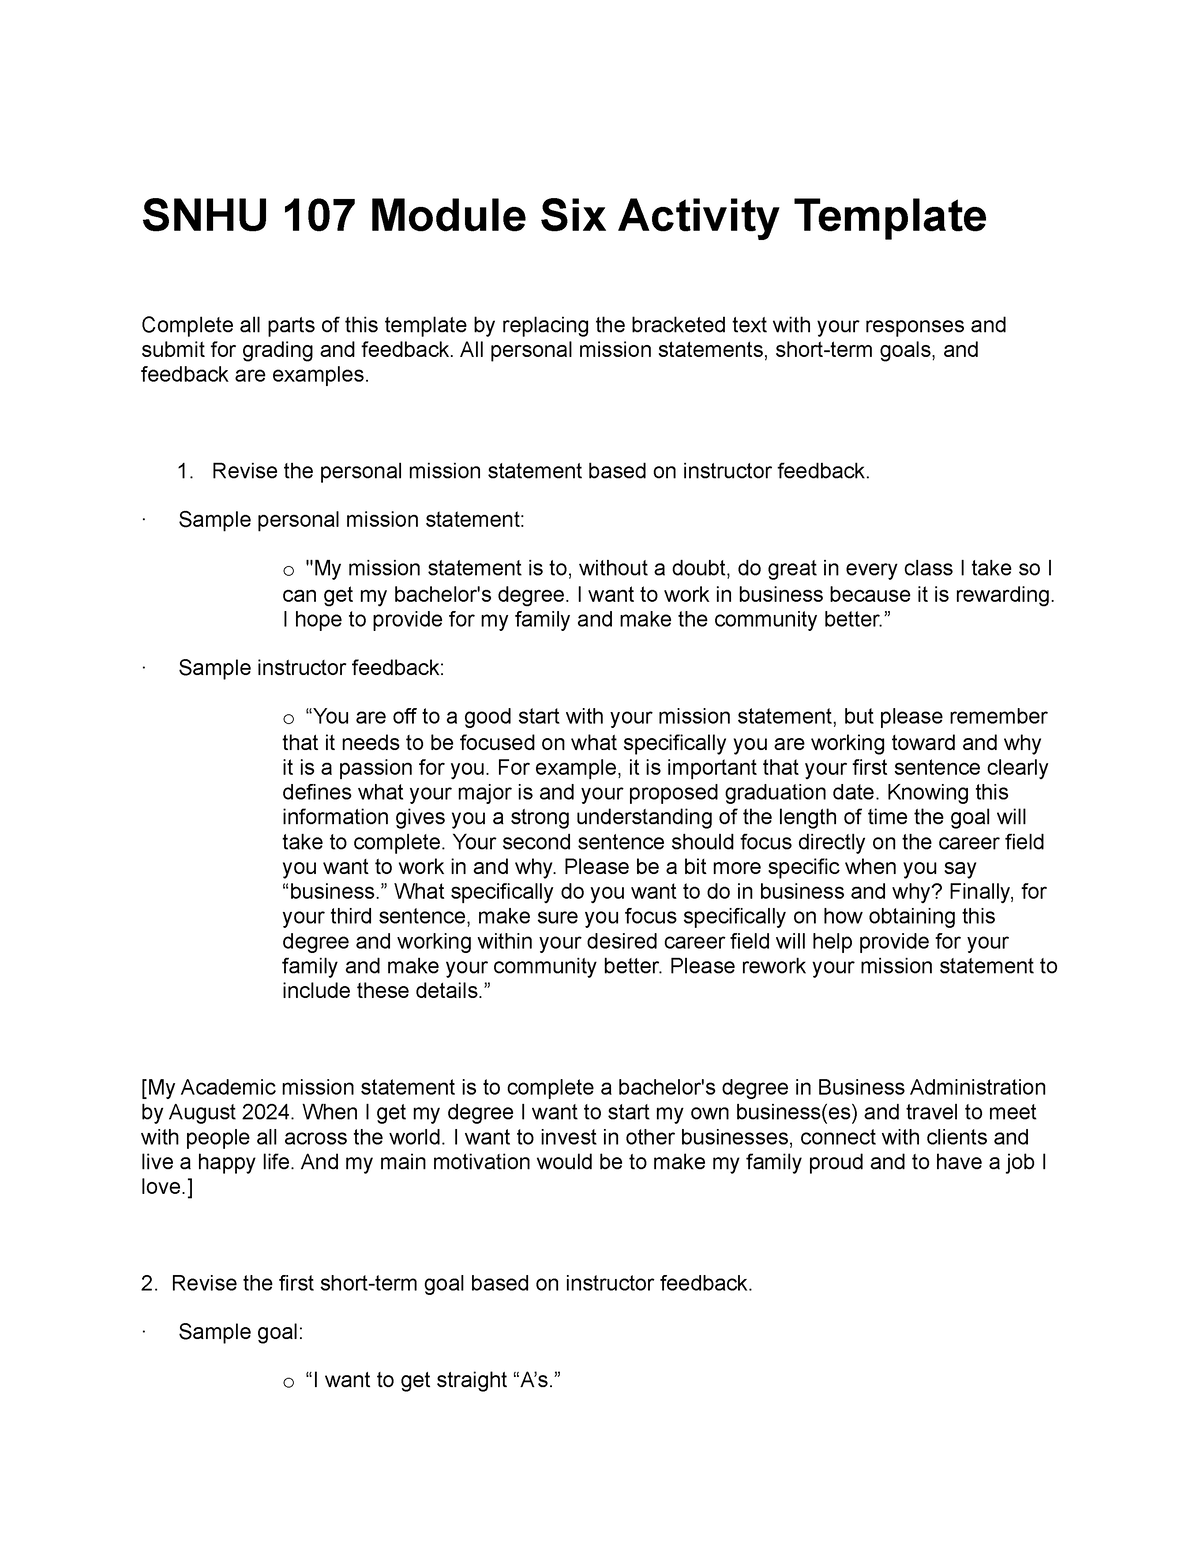 untitled-document-module-six-template-snhu-107-module-six-activity